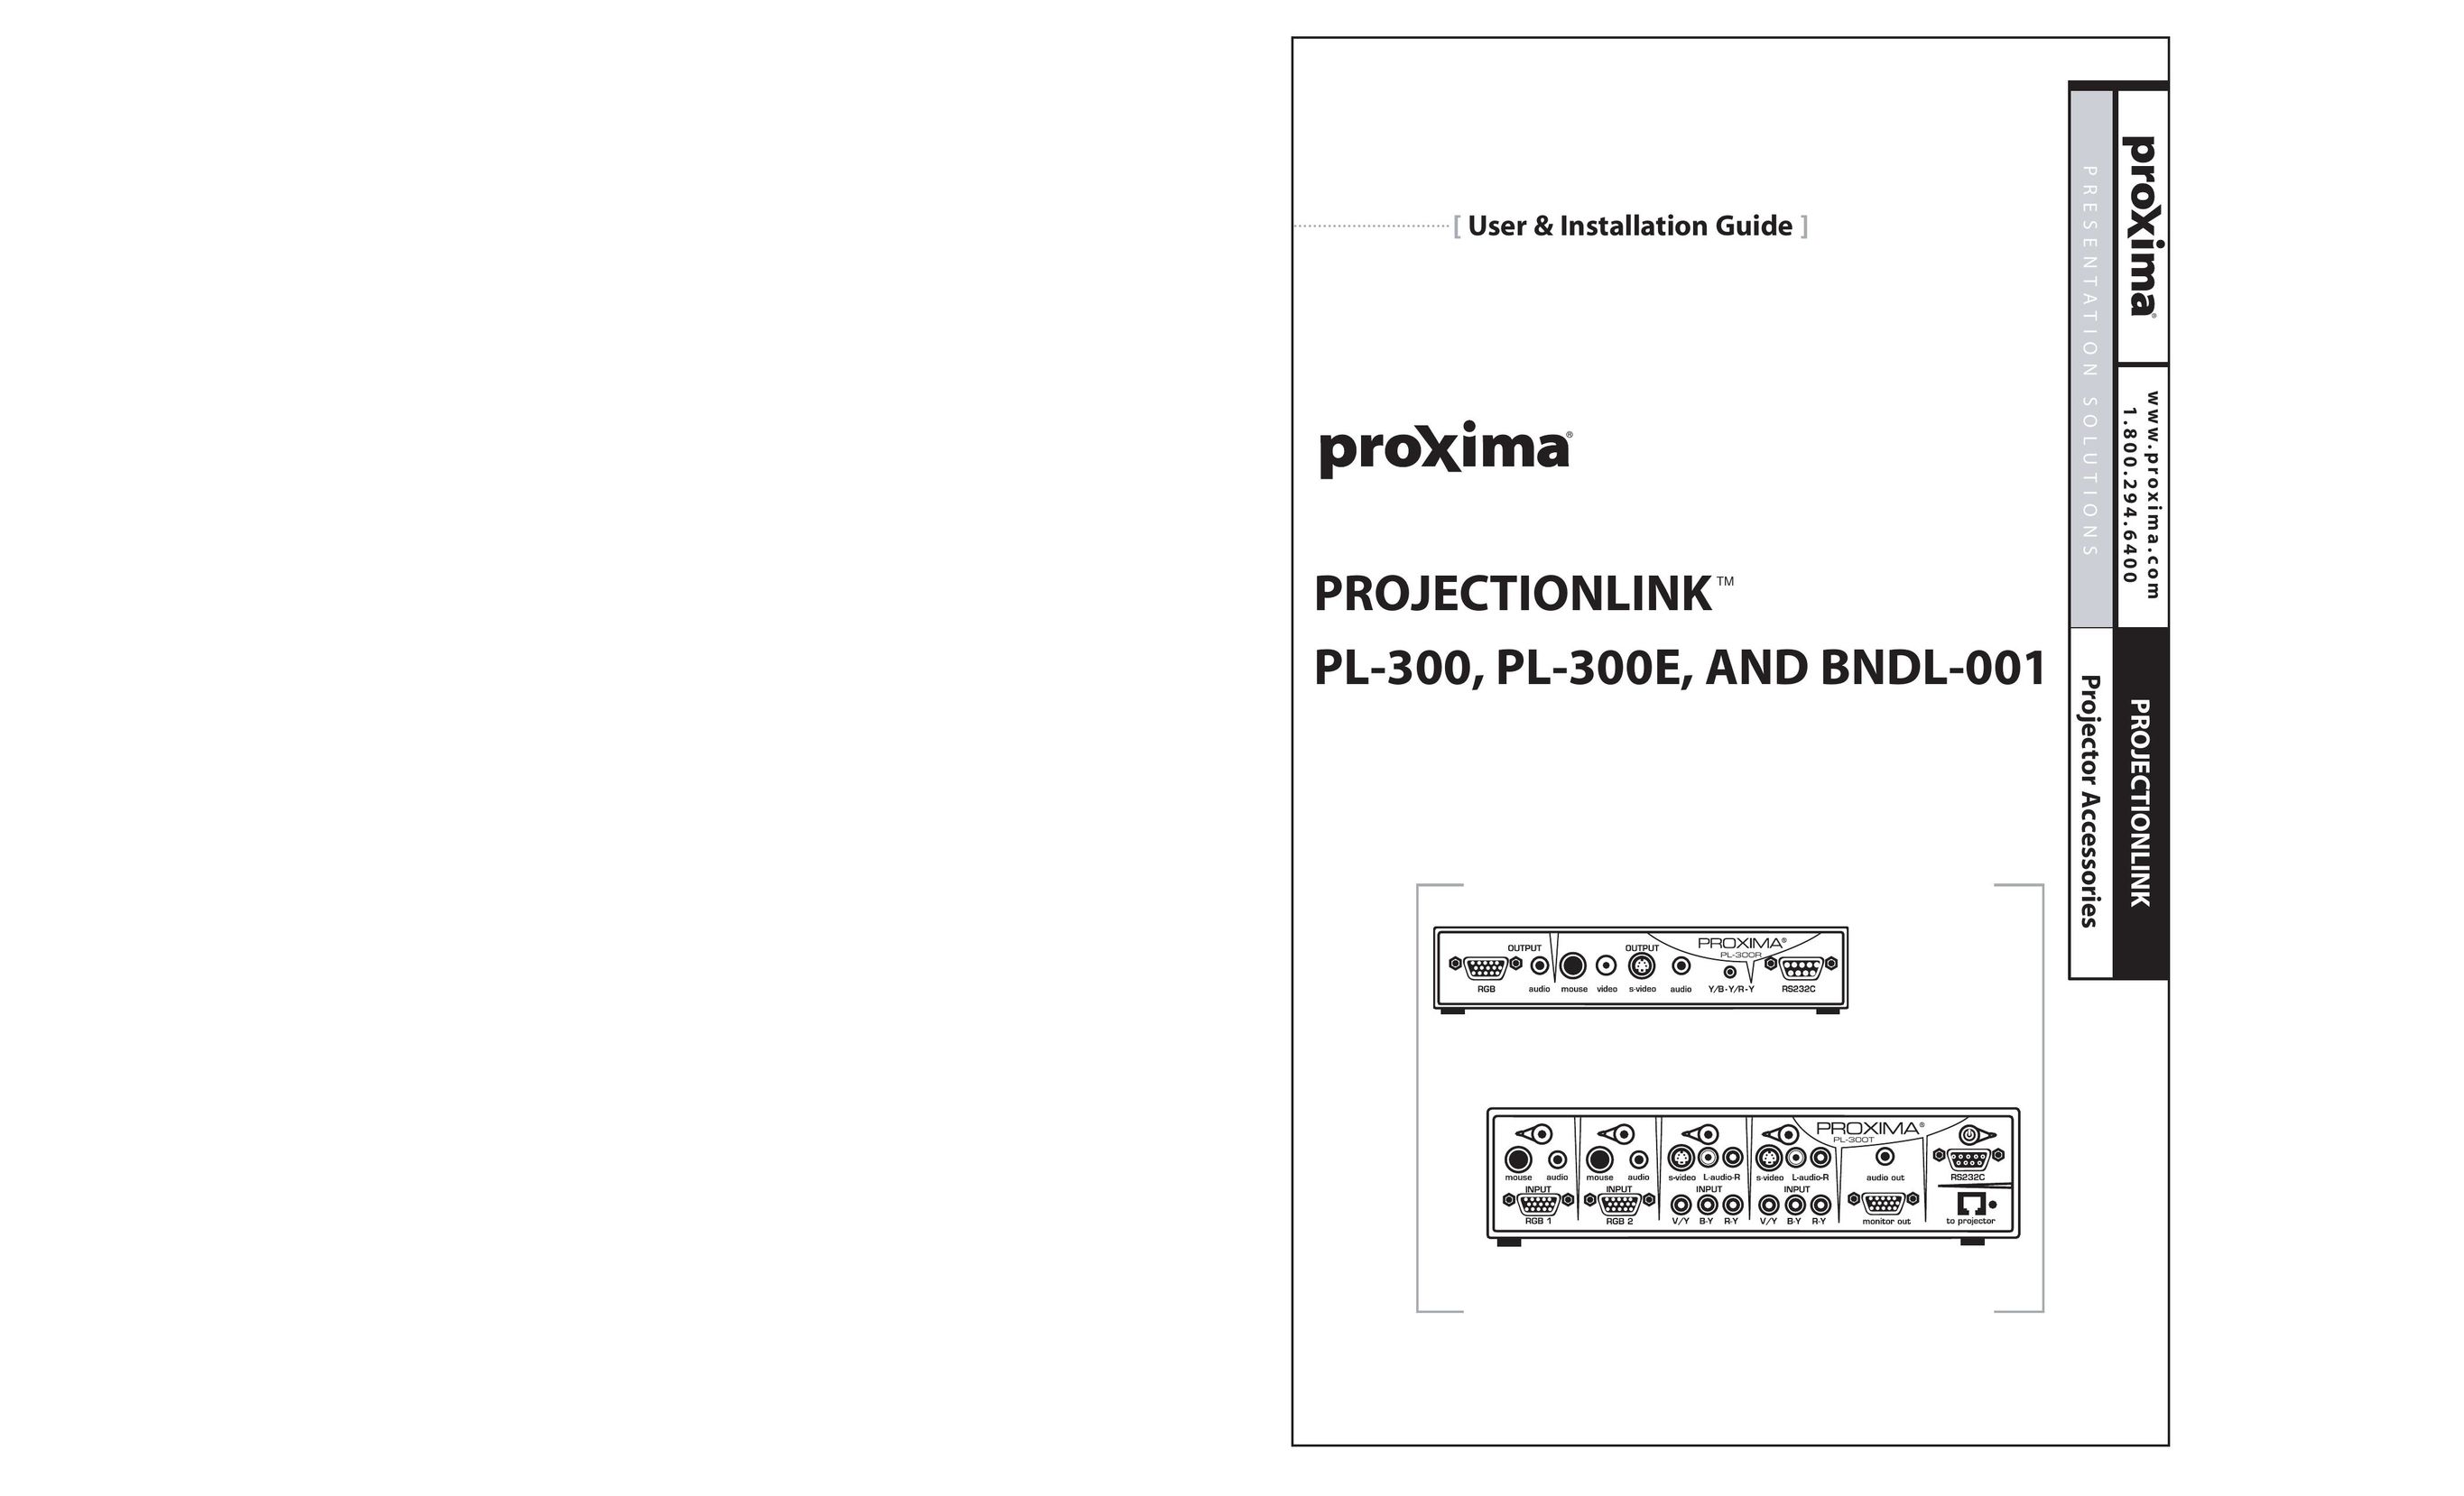 Proxima ASA BNDL-001 Network Card User Manual